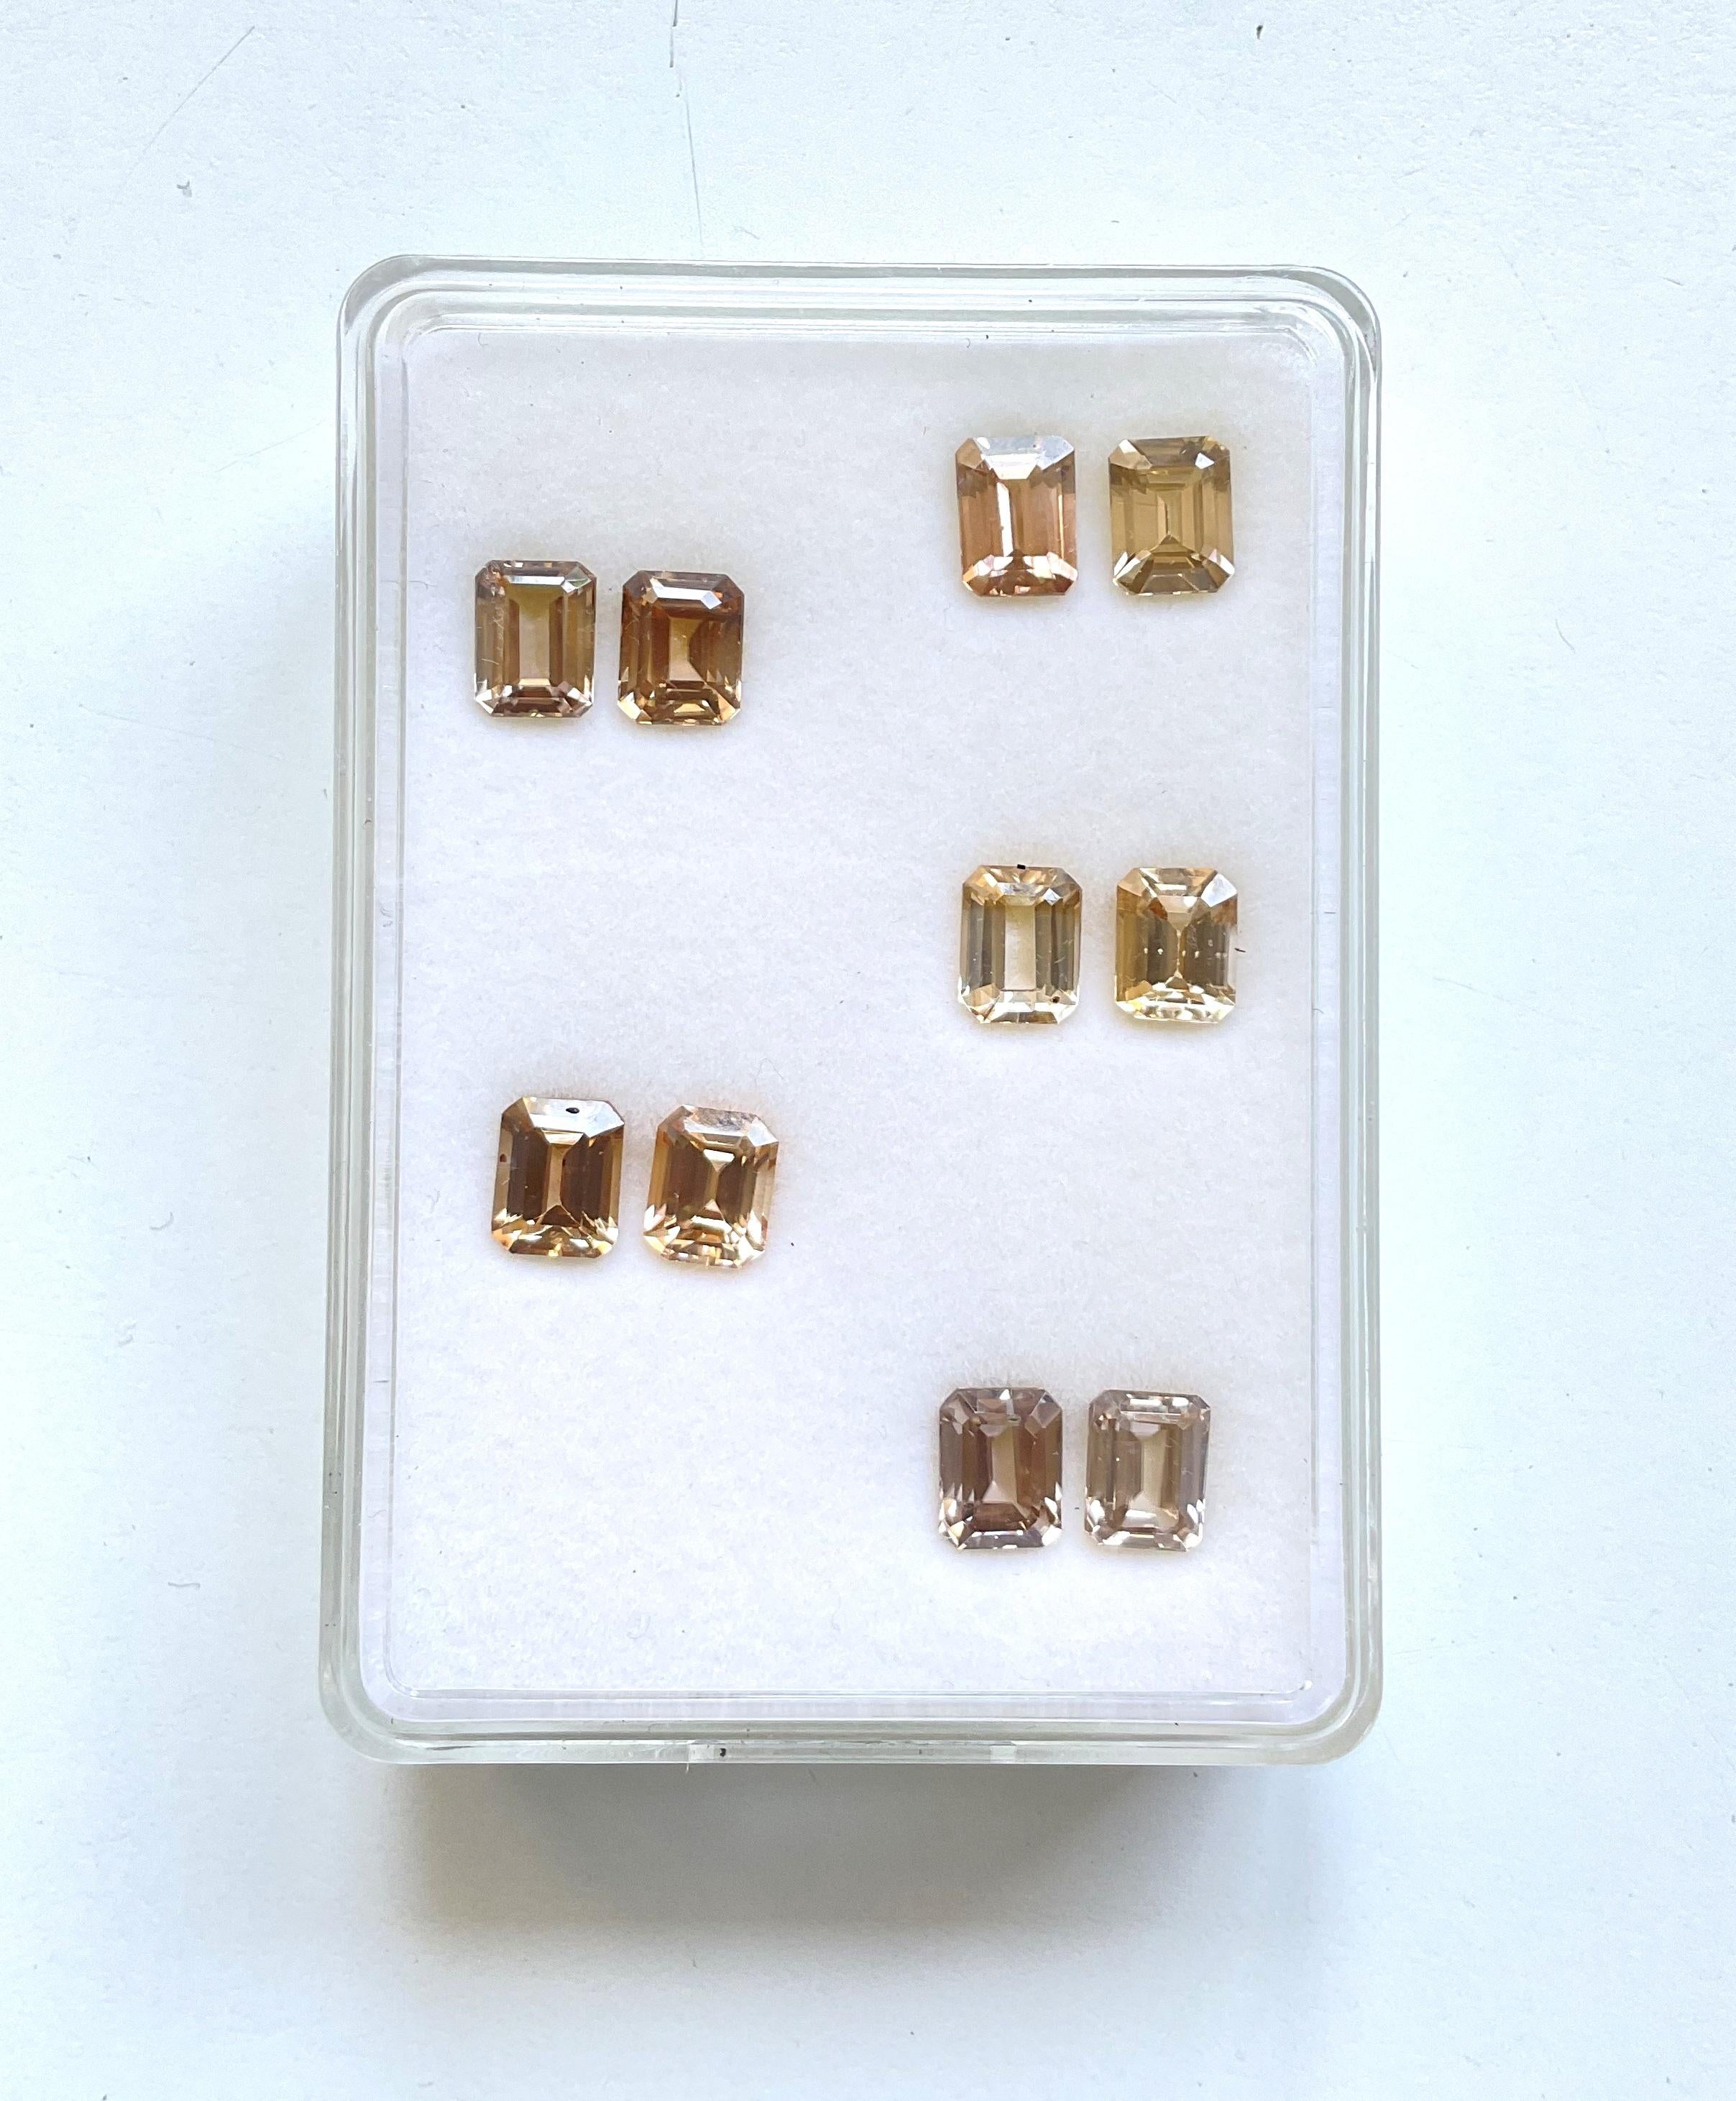 35.90 Carats Tanzania Zircon Natural Octagon Cut stone Fine Jewelry Gemstone

Weight - 35.90 Carats
Size - 9x7 mm
Shape - Octagon
Quantity - 10 Pieces